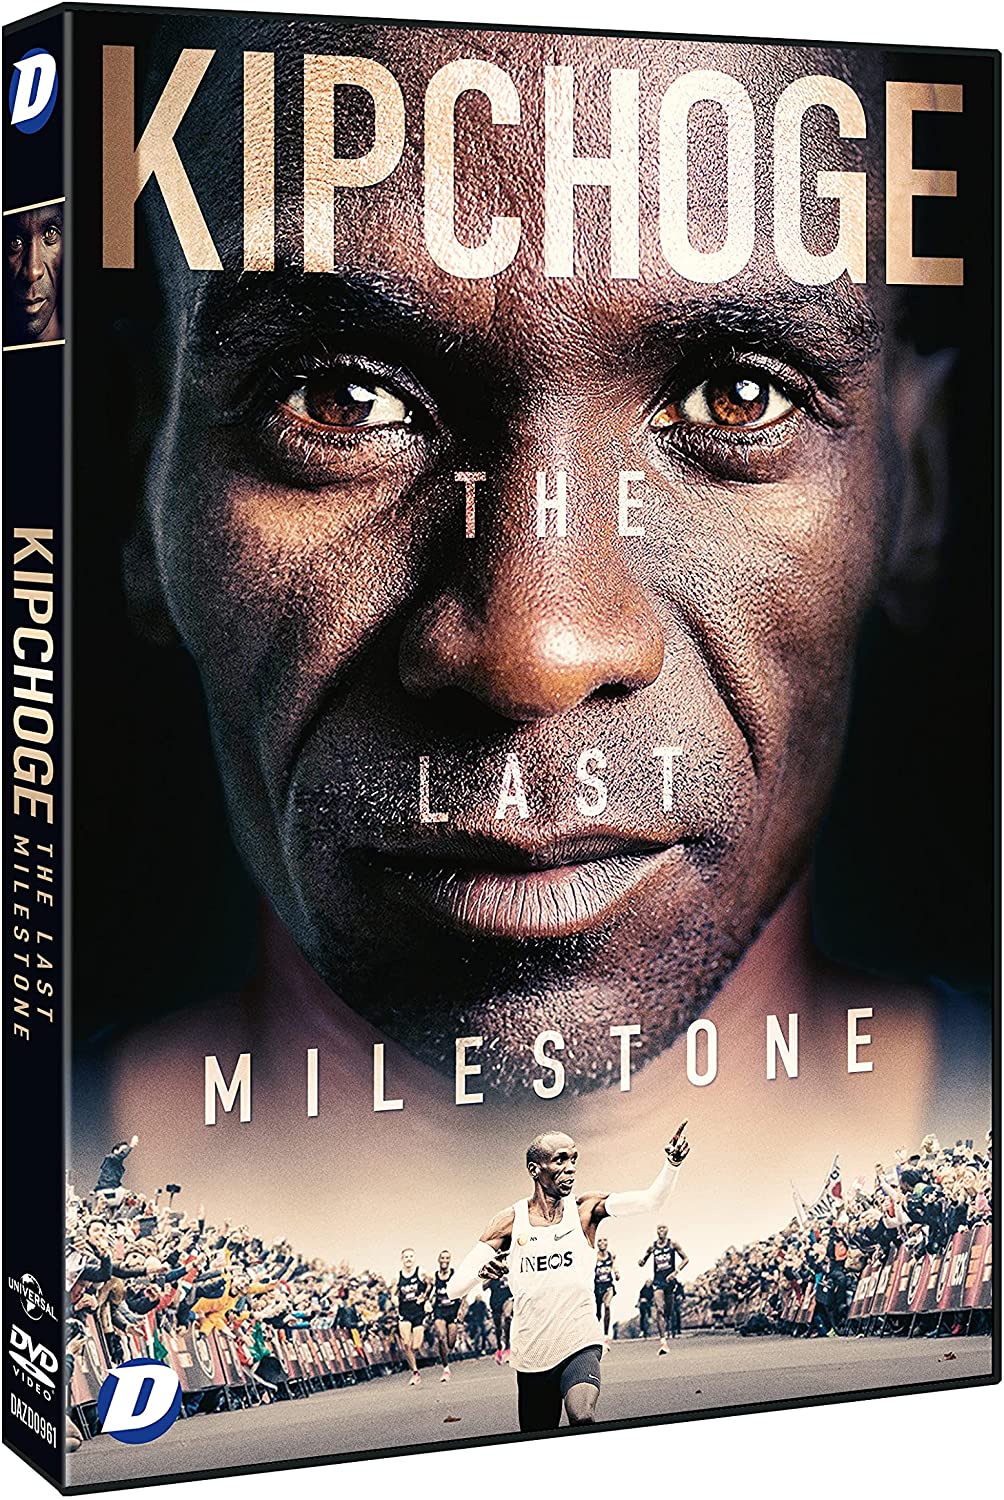 Kipchoge: The Last Milestone [2021] [DVD]